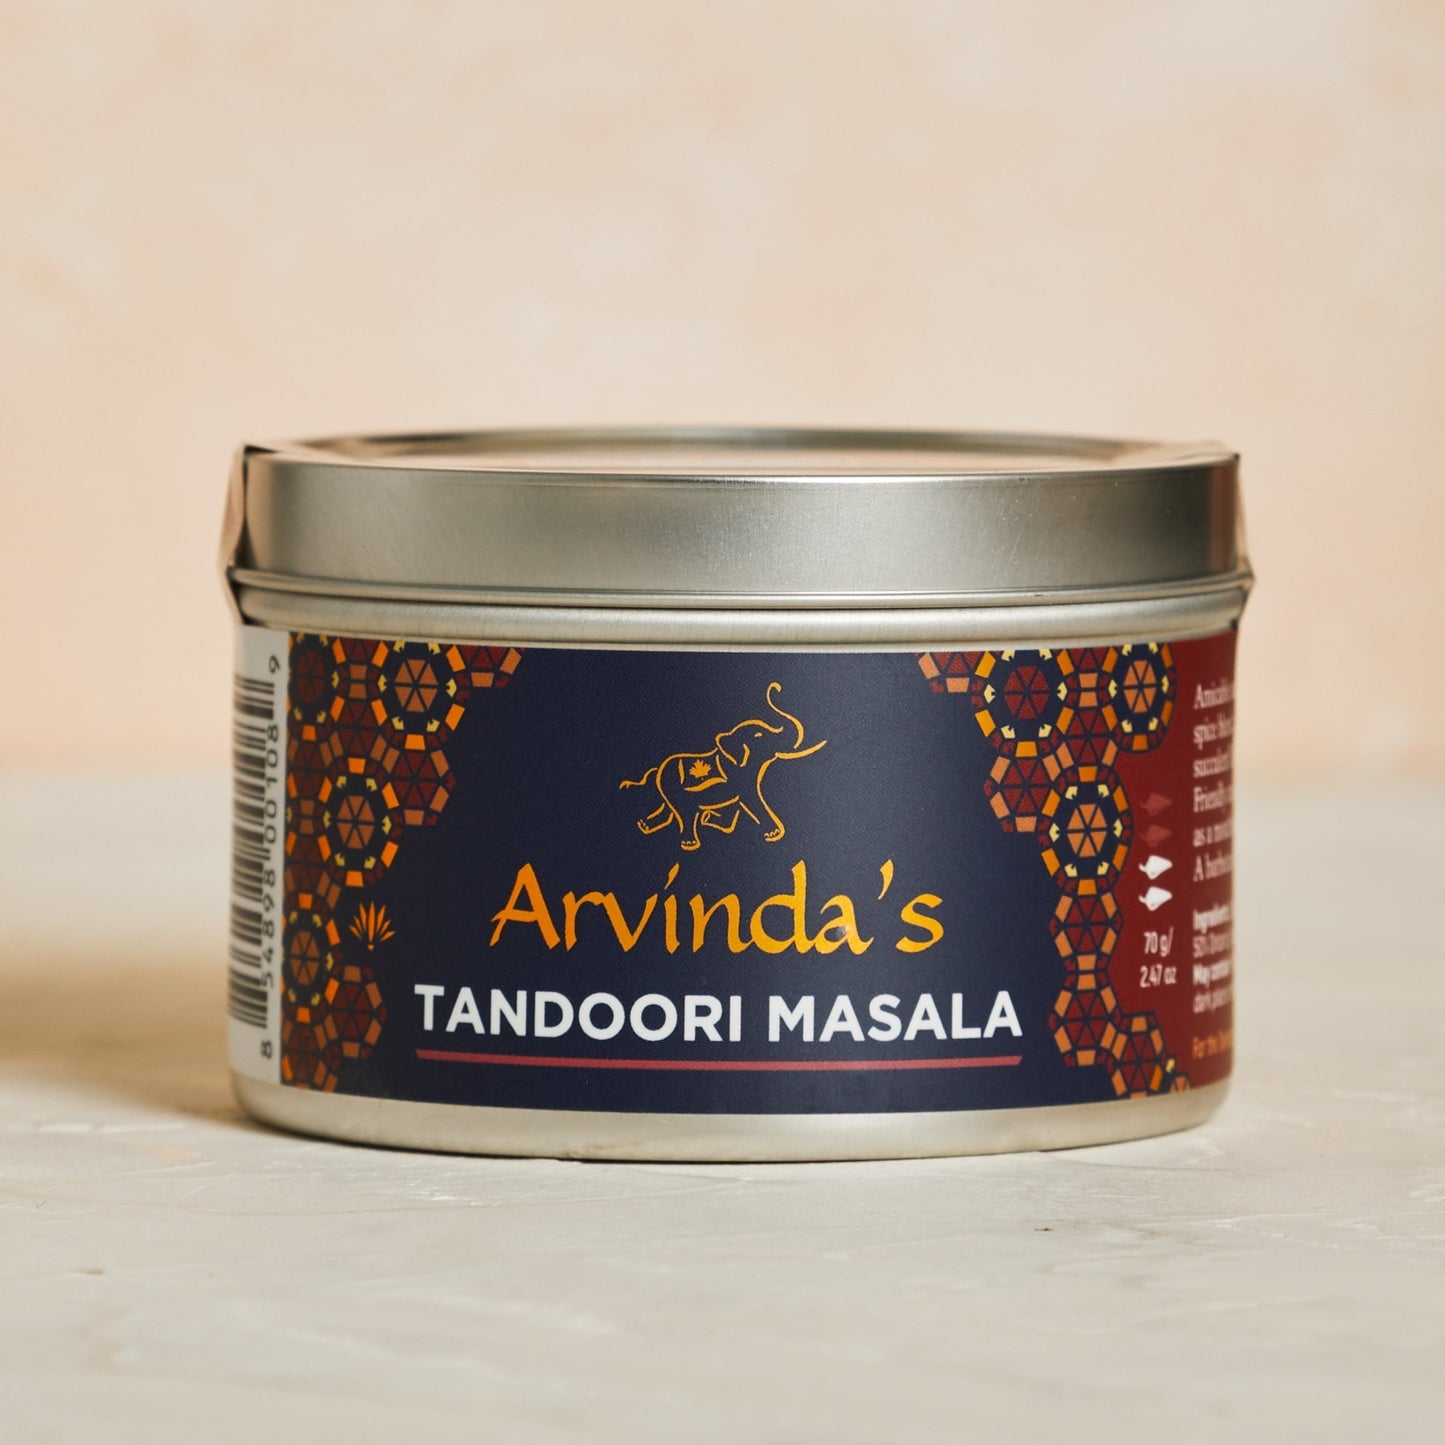 Arvinda's Tandoori Masala